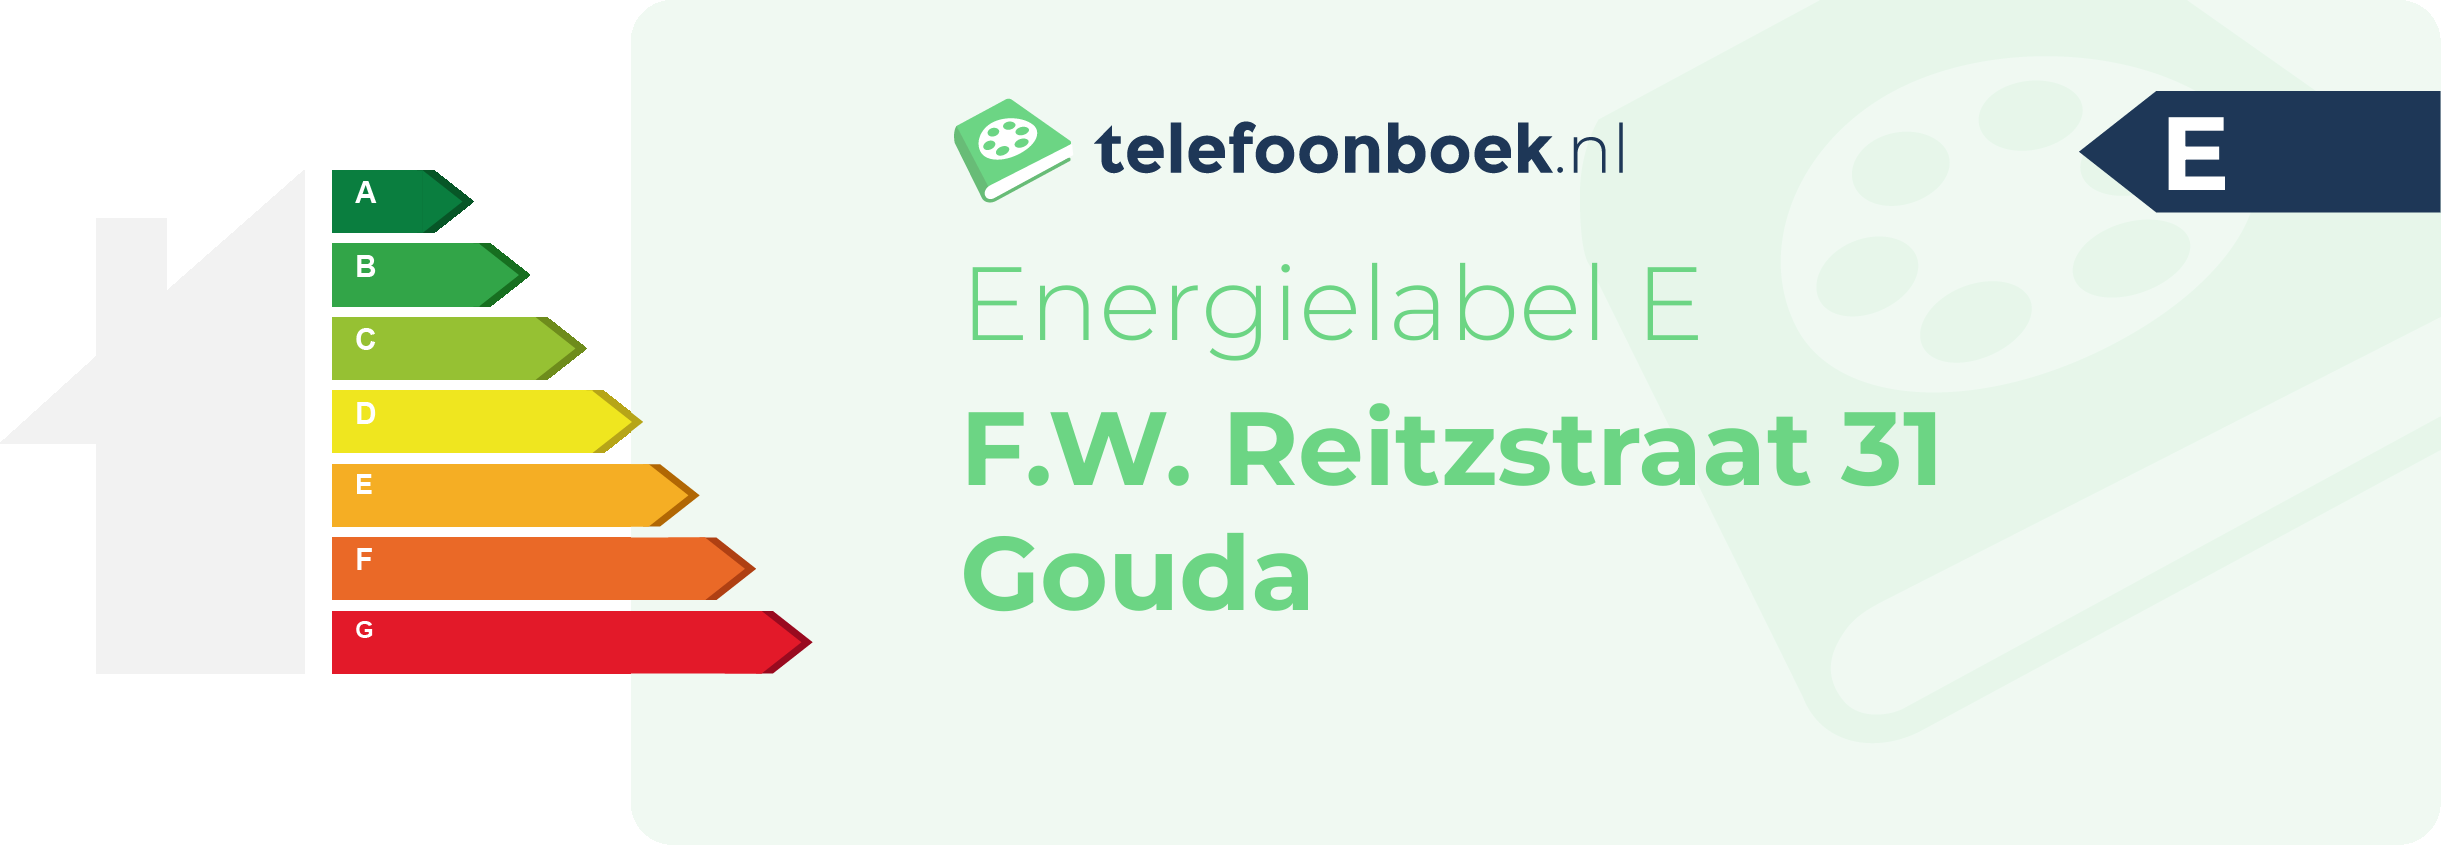 Energielabel F.W. Reitzstraat 31 Gouda